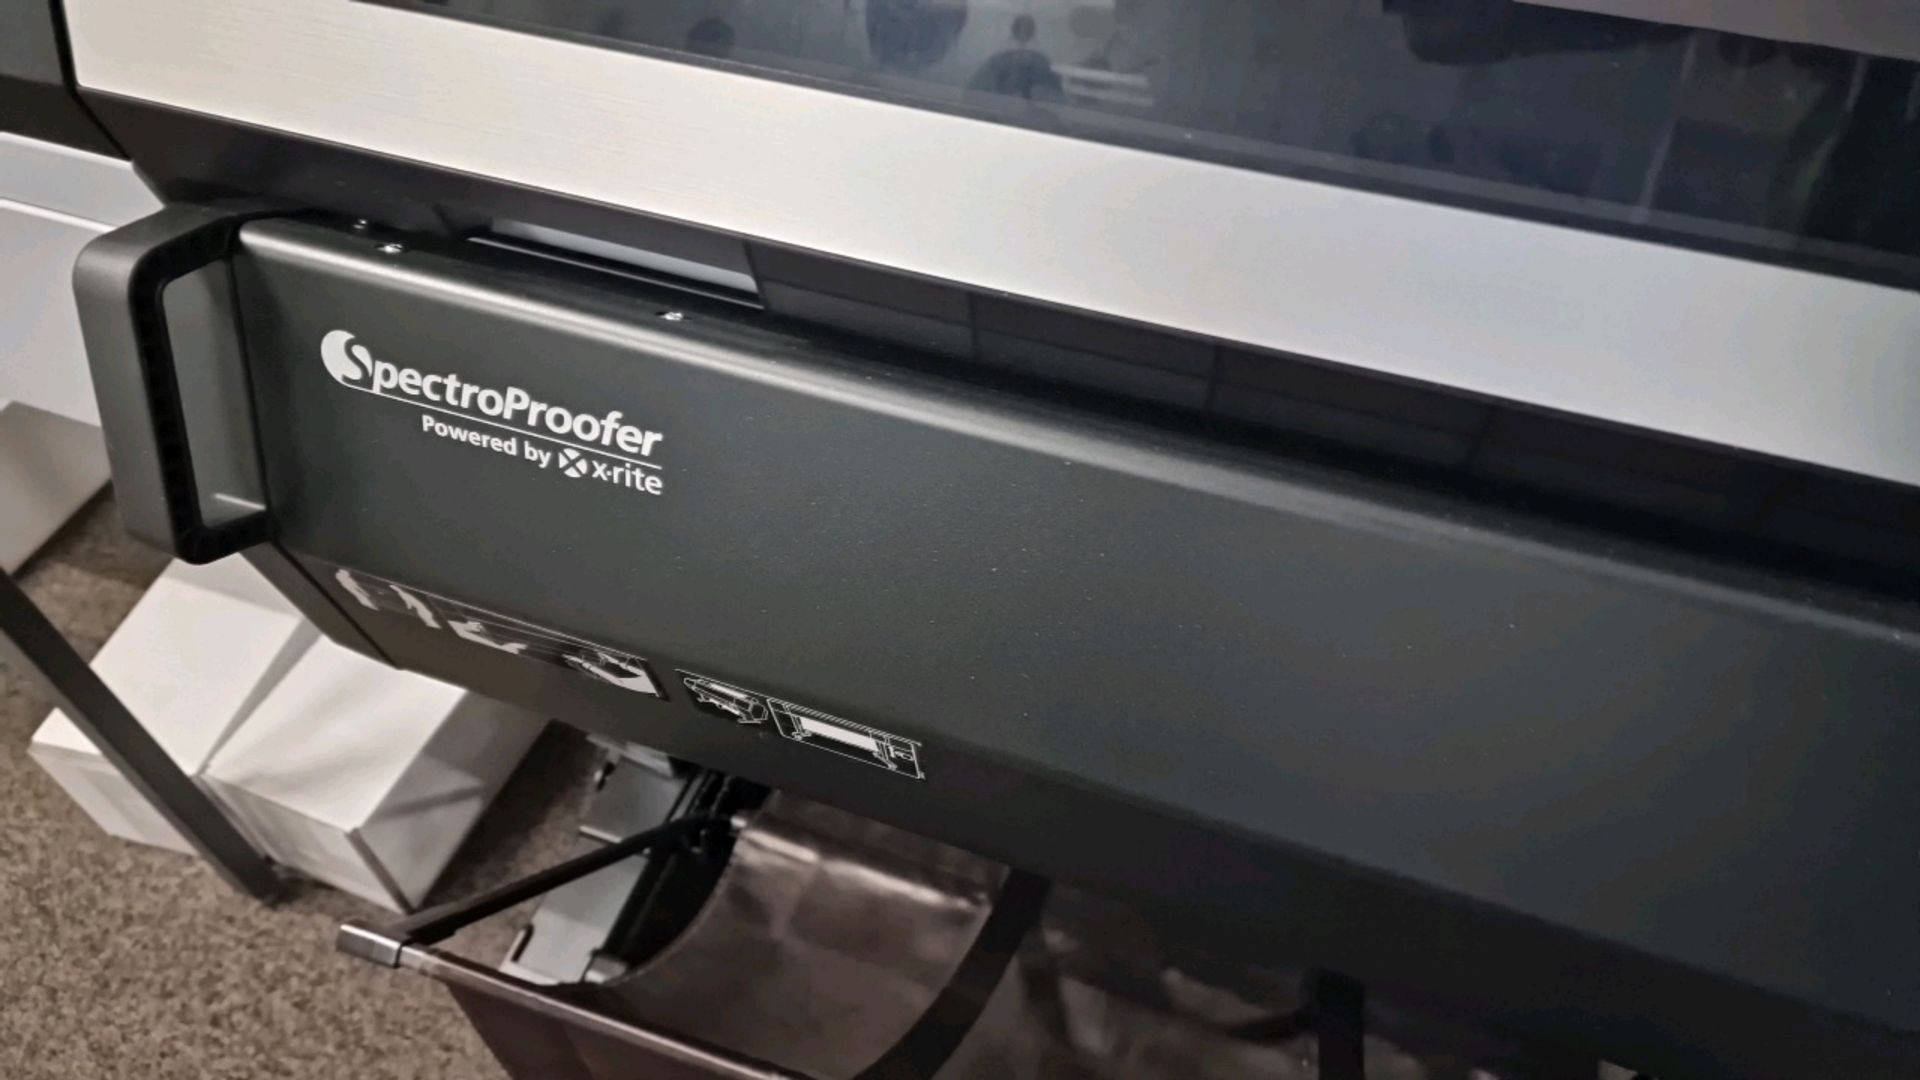 Epson Spectro Proofer Printer - Image 6 of 10